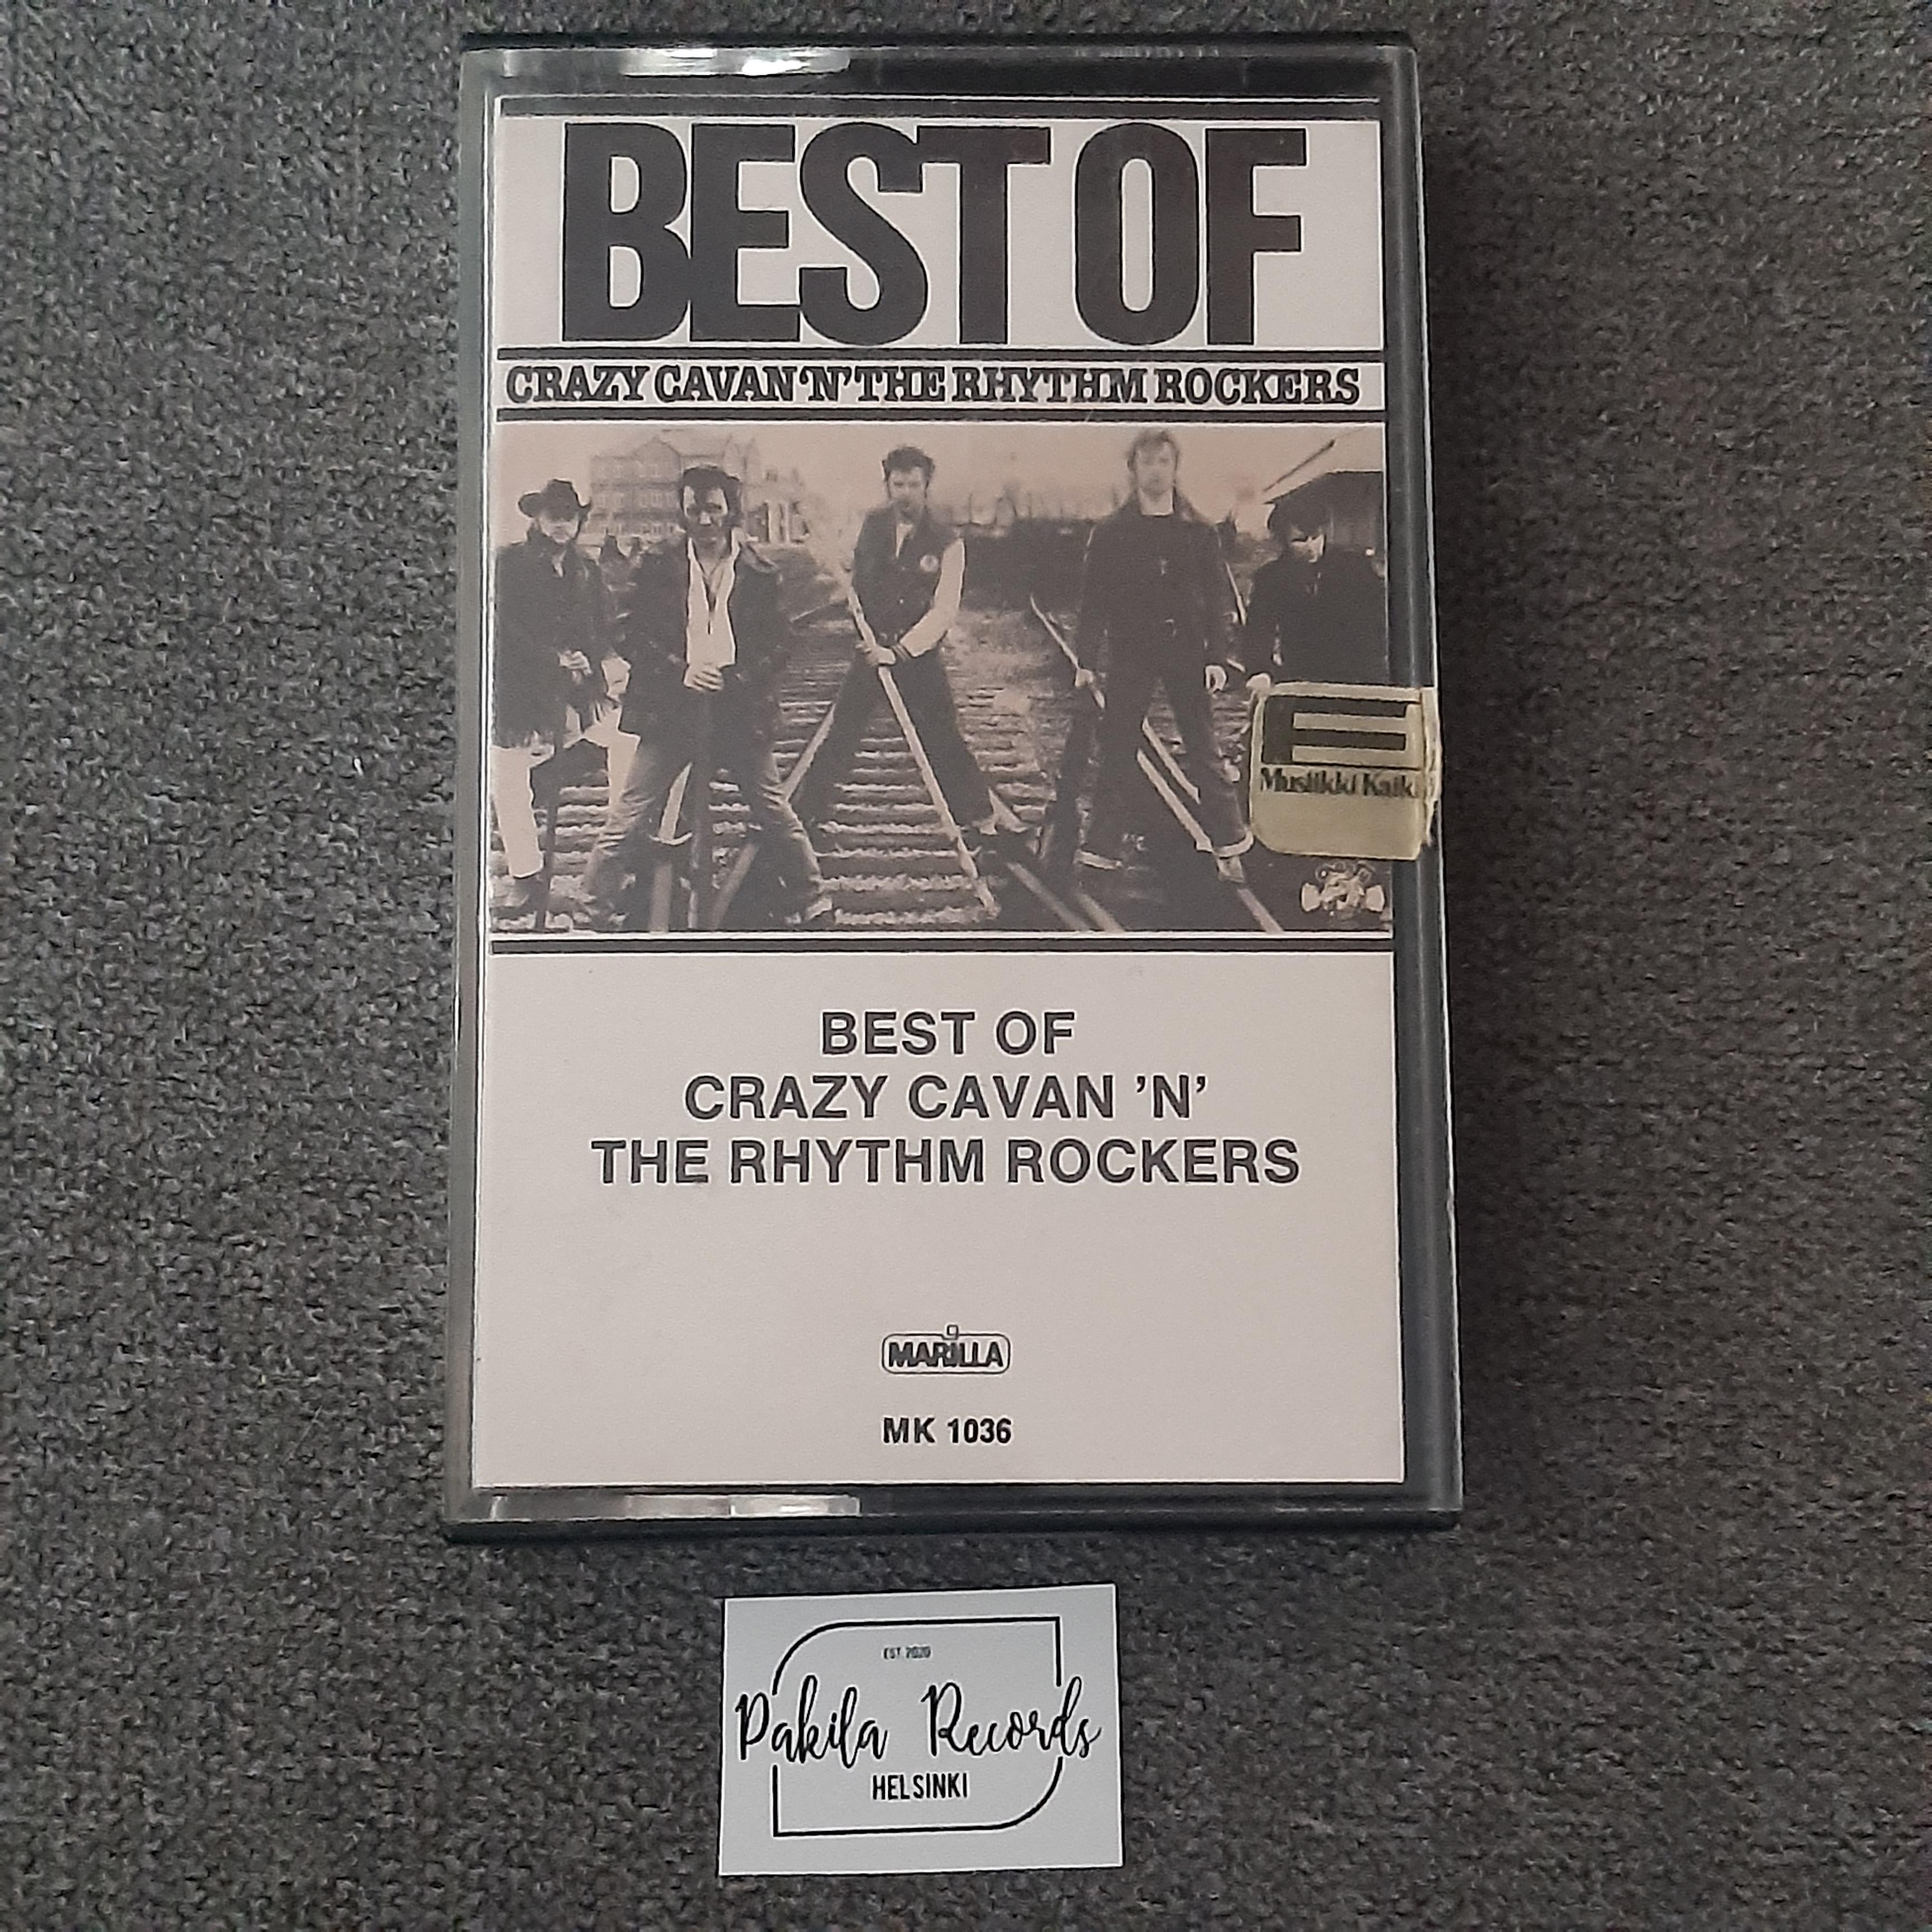 Crazy Cavan And The Rhythm Rockers - Best Of (kasetti)